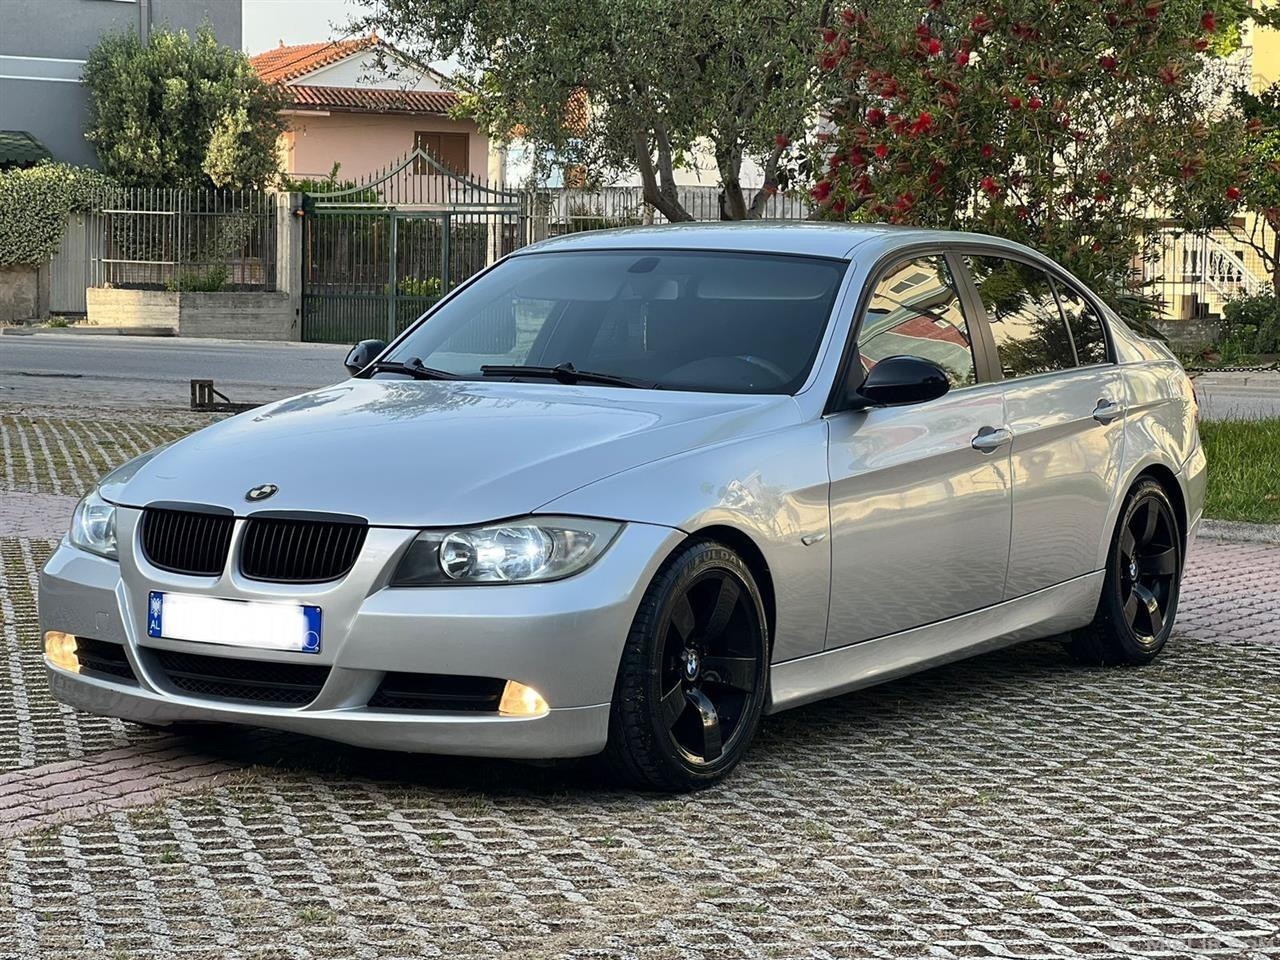 BMW-320d-2.0 Diesel-2006-Automatik-Xhama te zinj-Super gjend